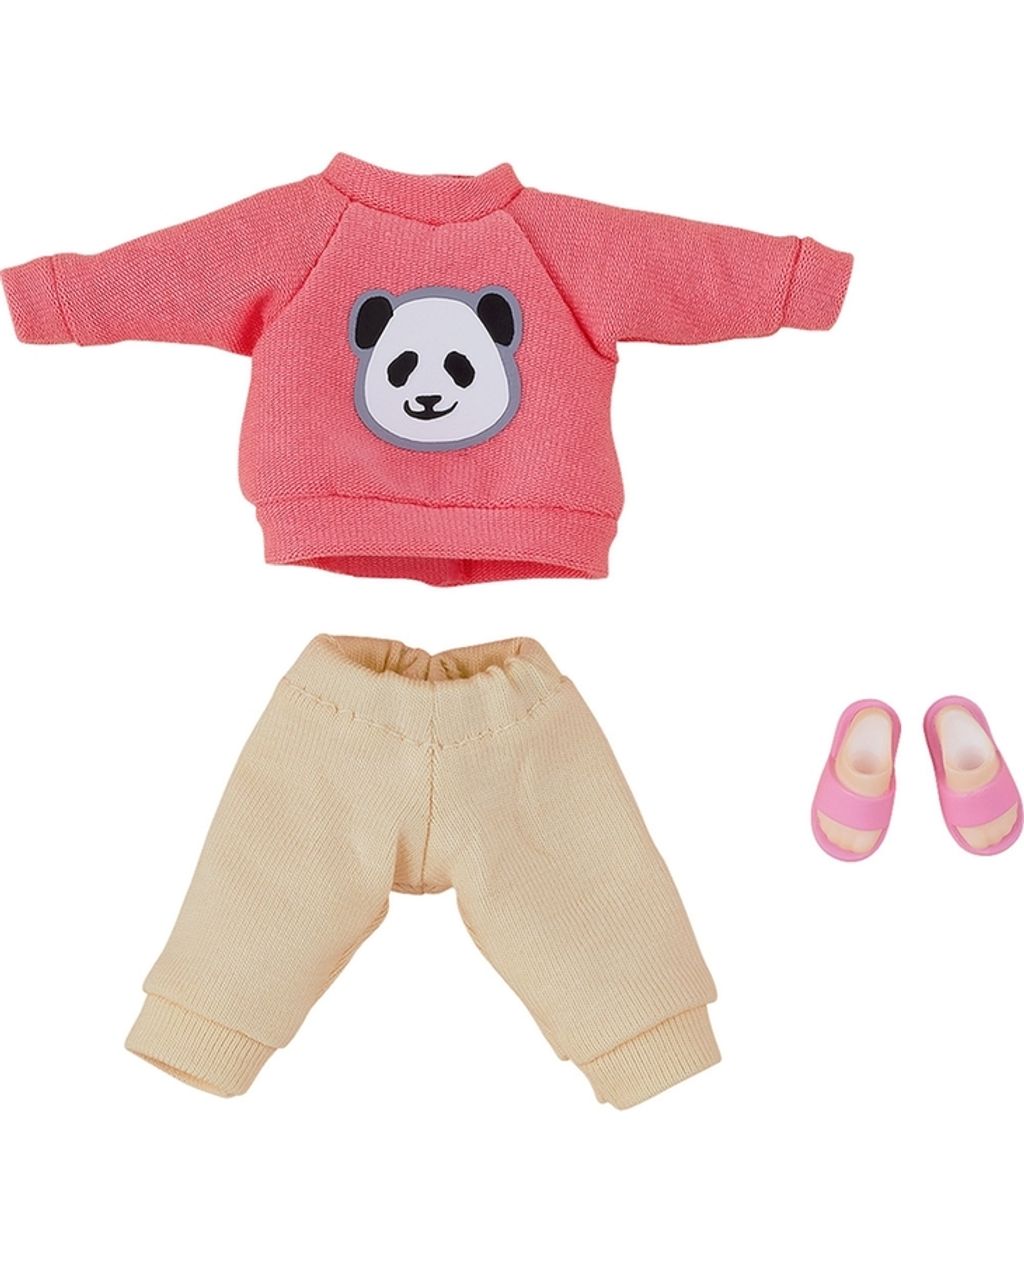 Sweatshirt and Sweatpants (Pink)